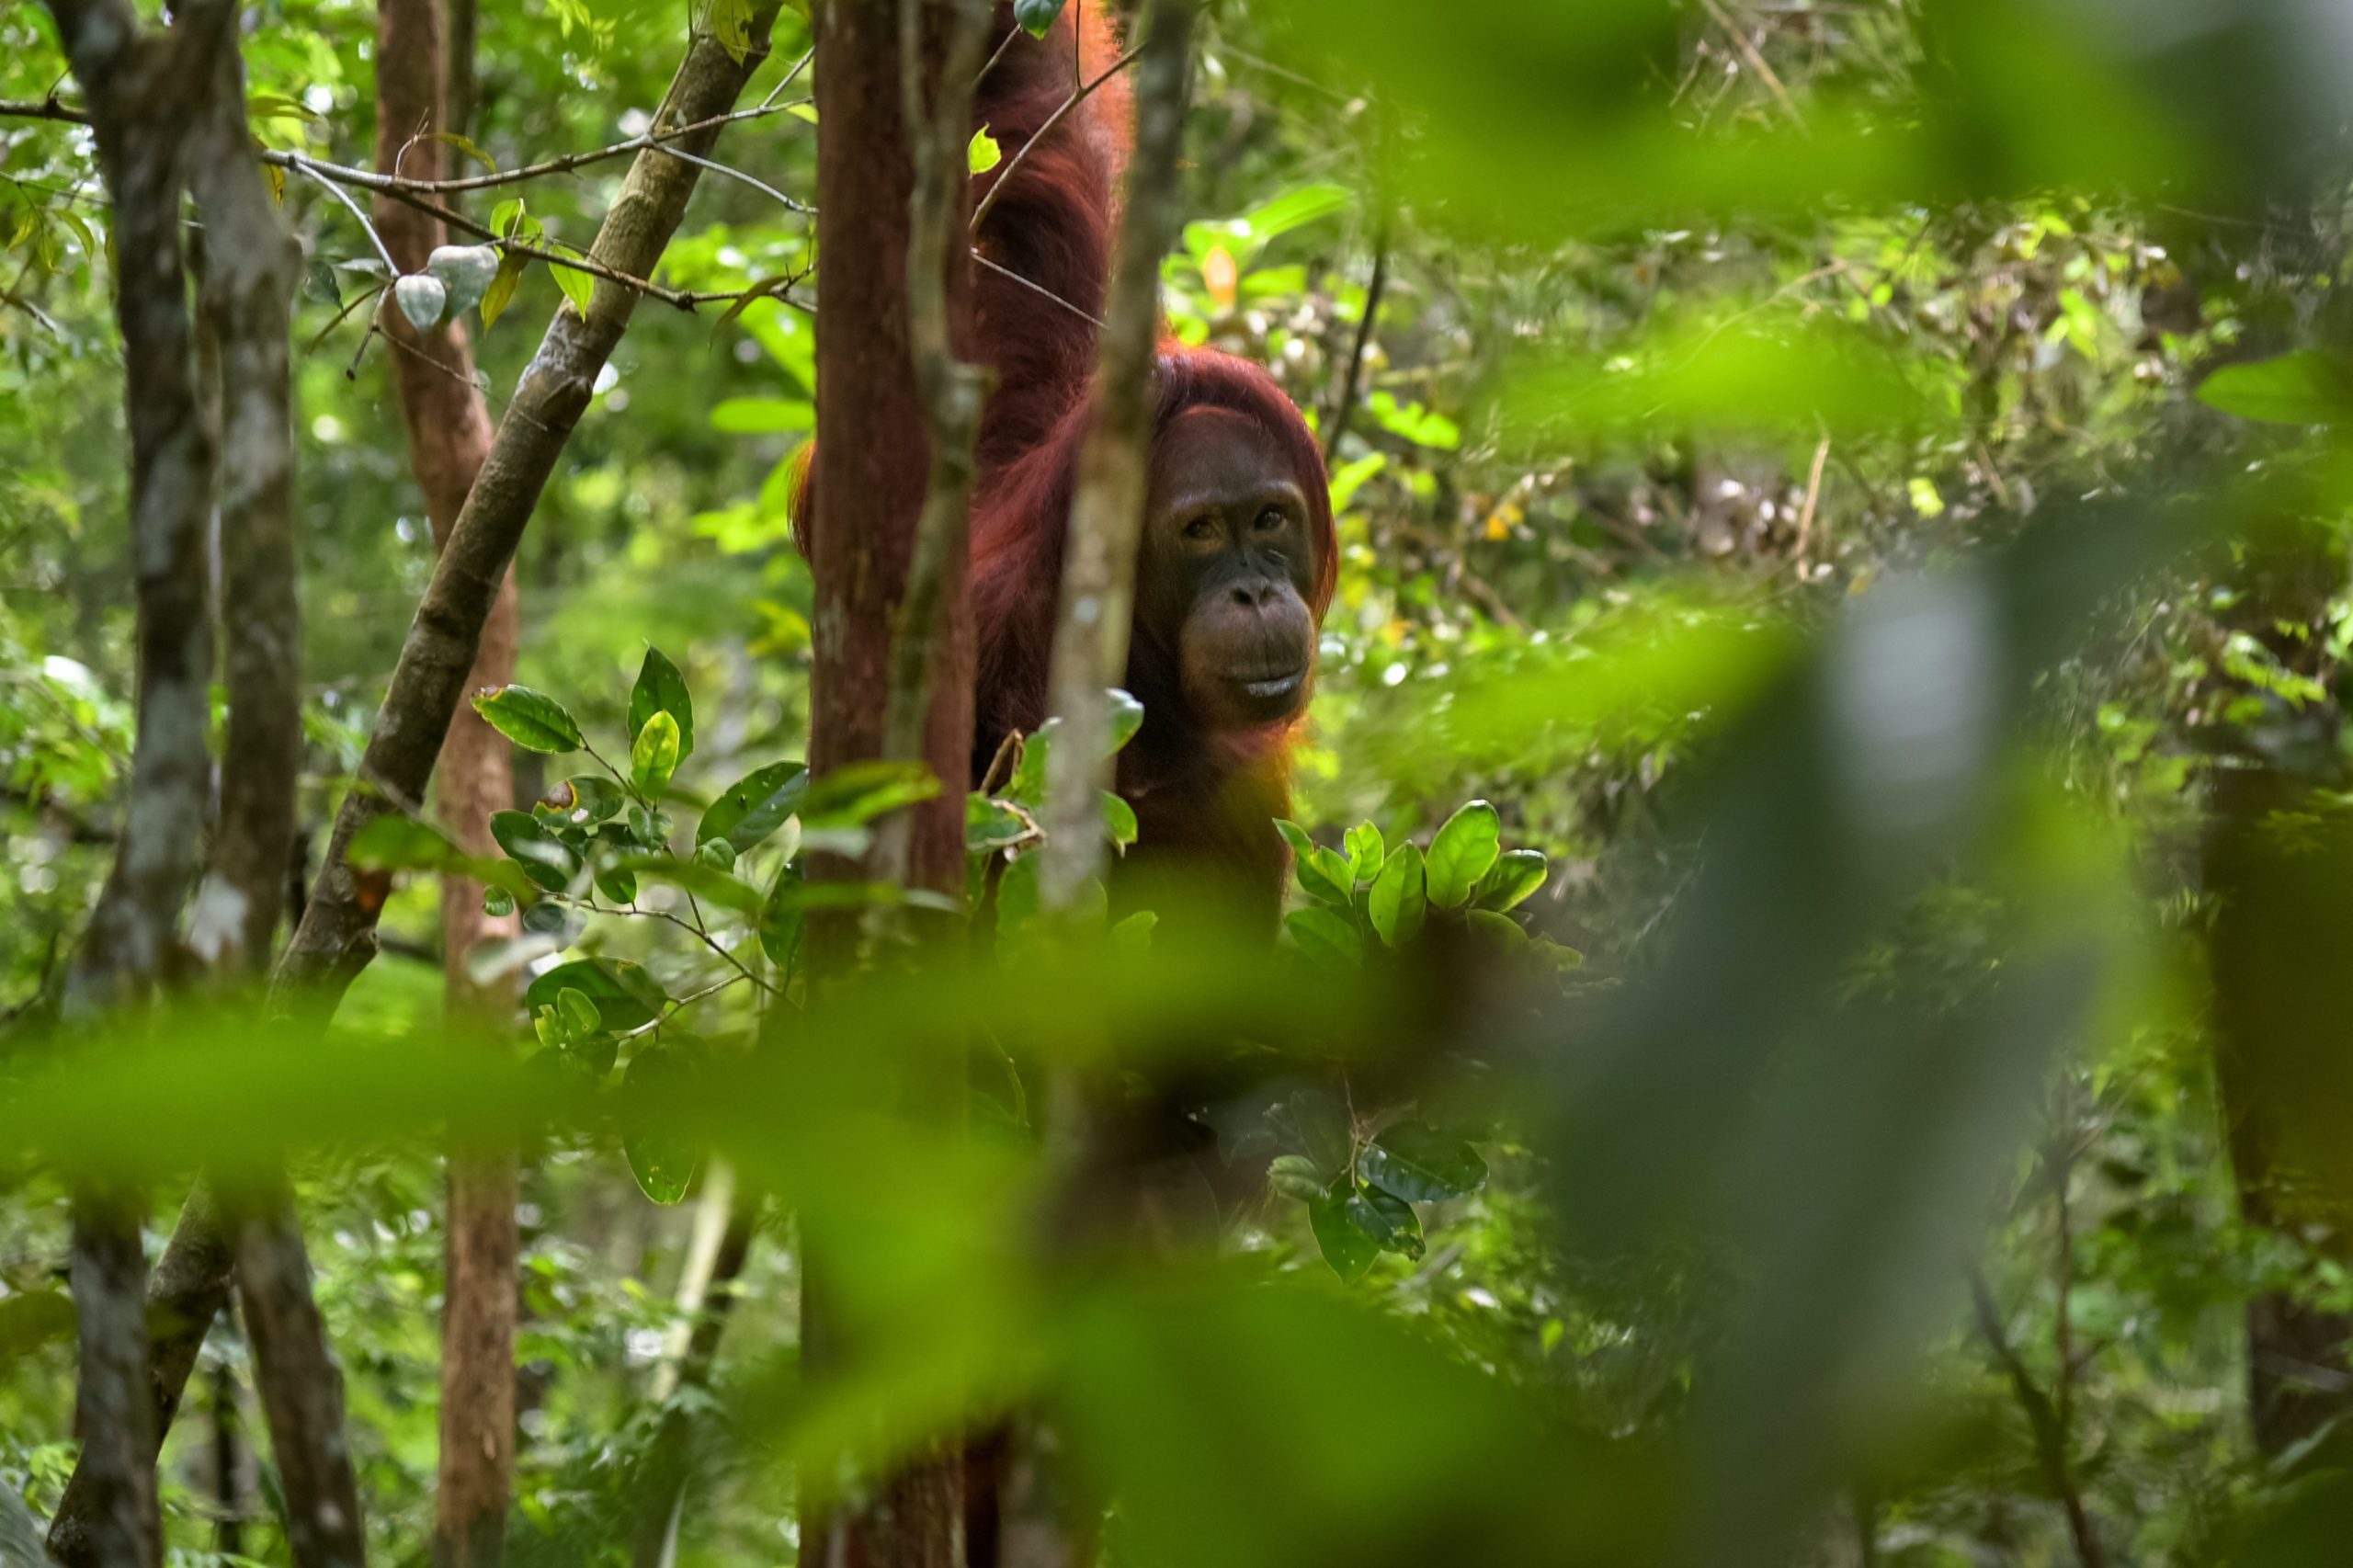 Where to go in Borneo - Image of orangutan in Danum Valley